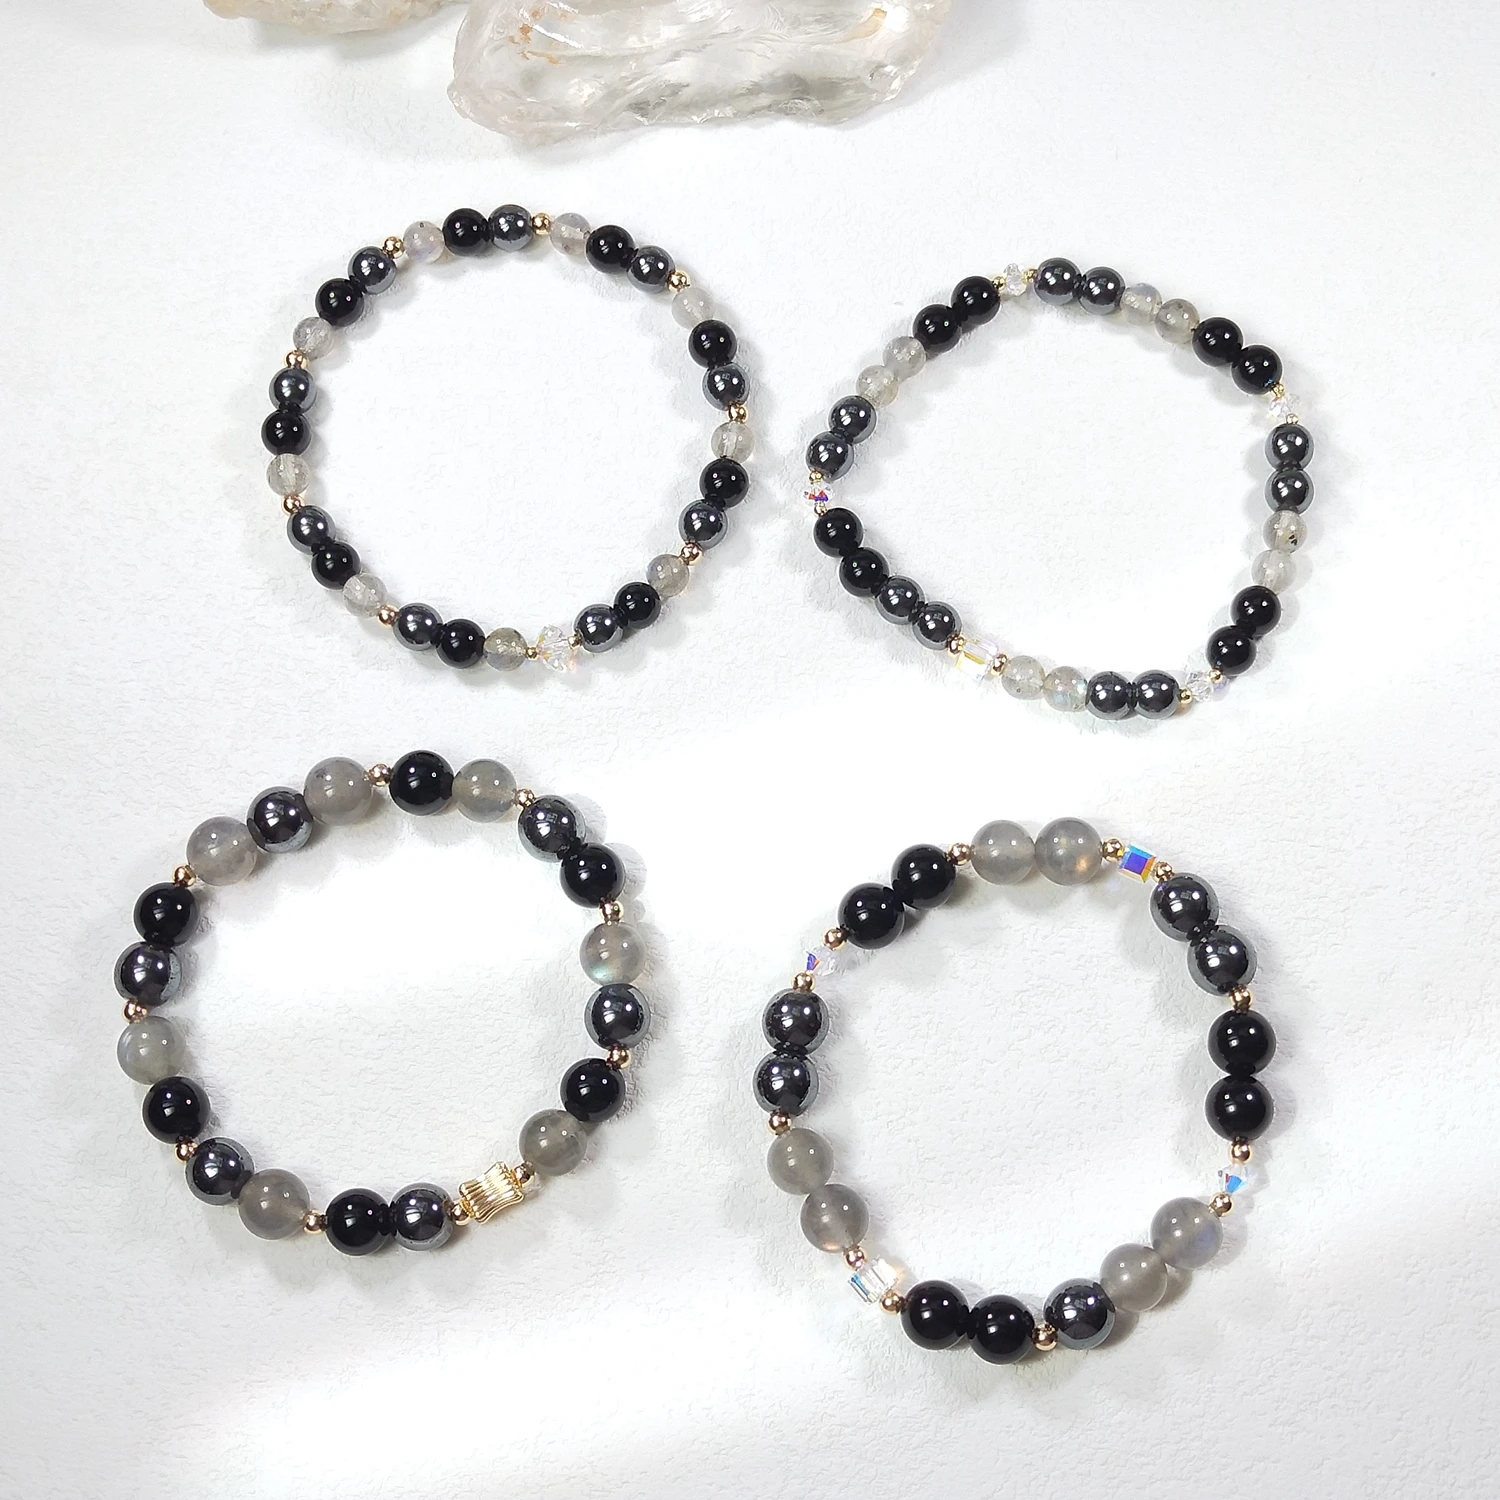 

Lii Ji Natural Stone Hematite Black Agate Labradorite 6/8mm With Crystal American 14K Gold Filled Elastic Bracelet